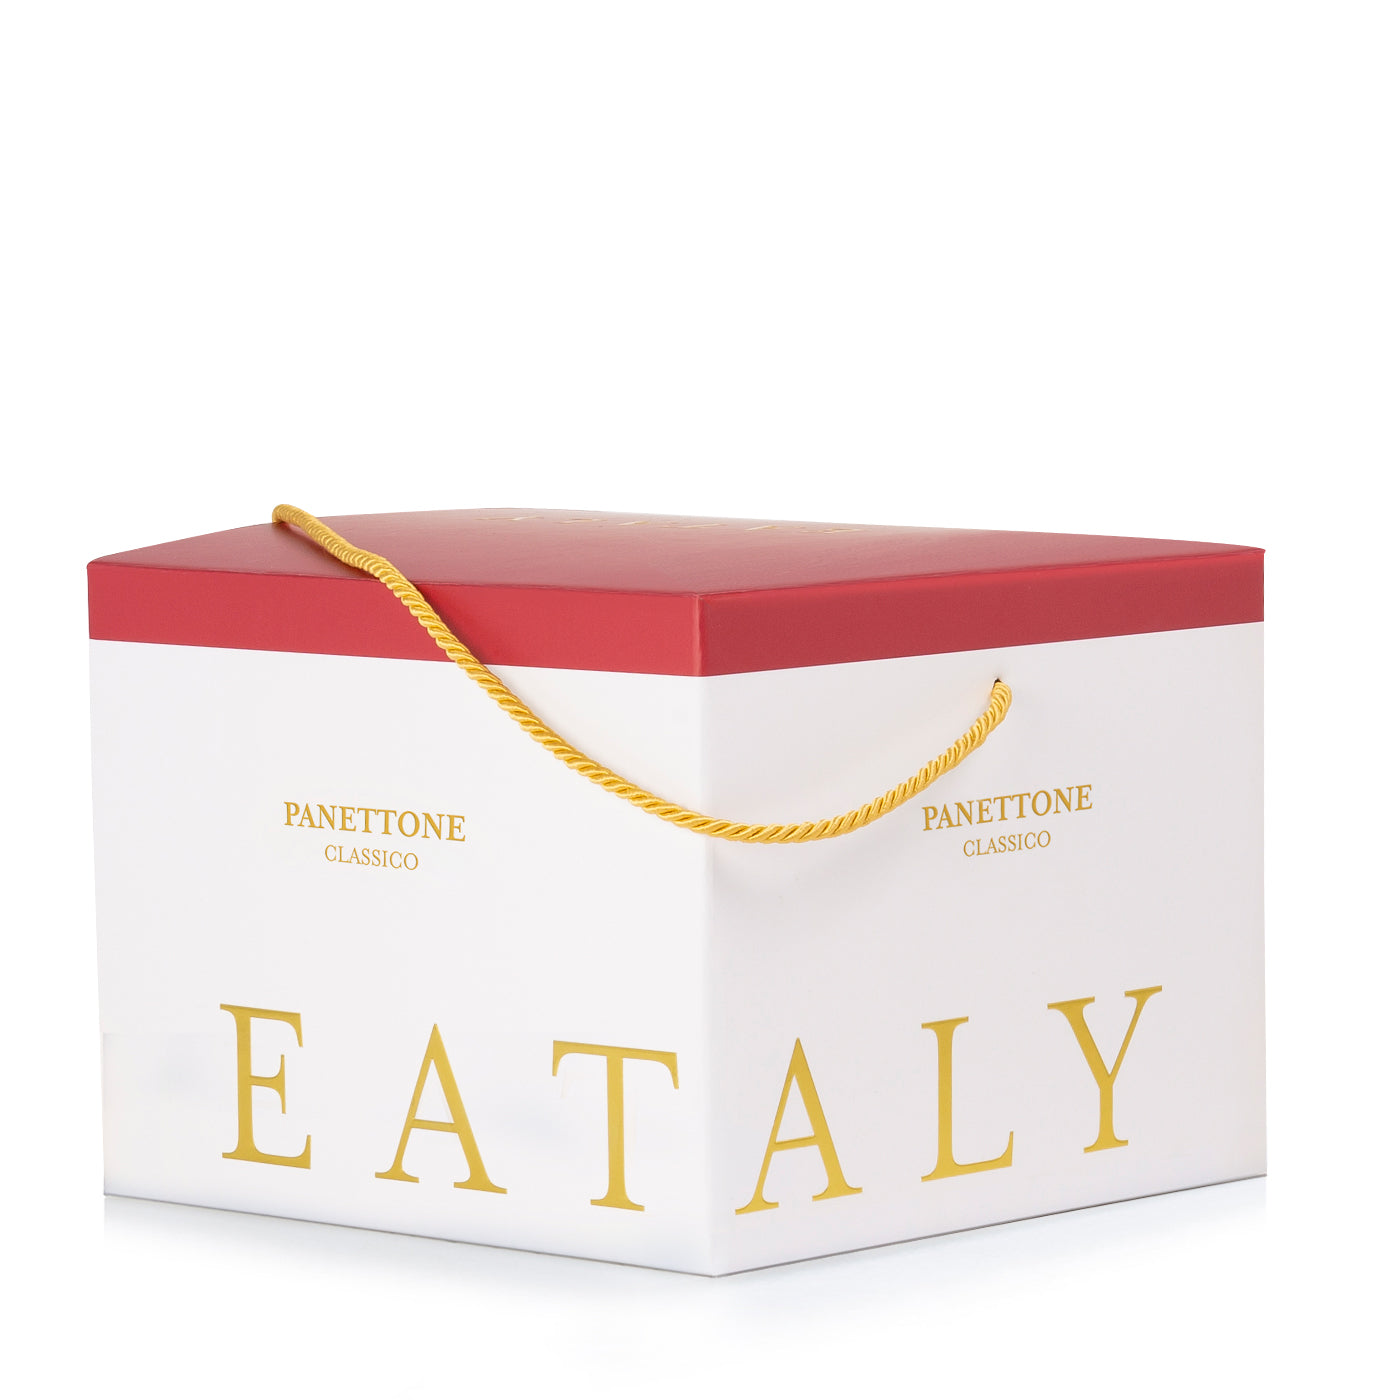 Panettone classique Eataly